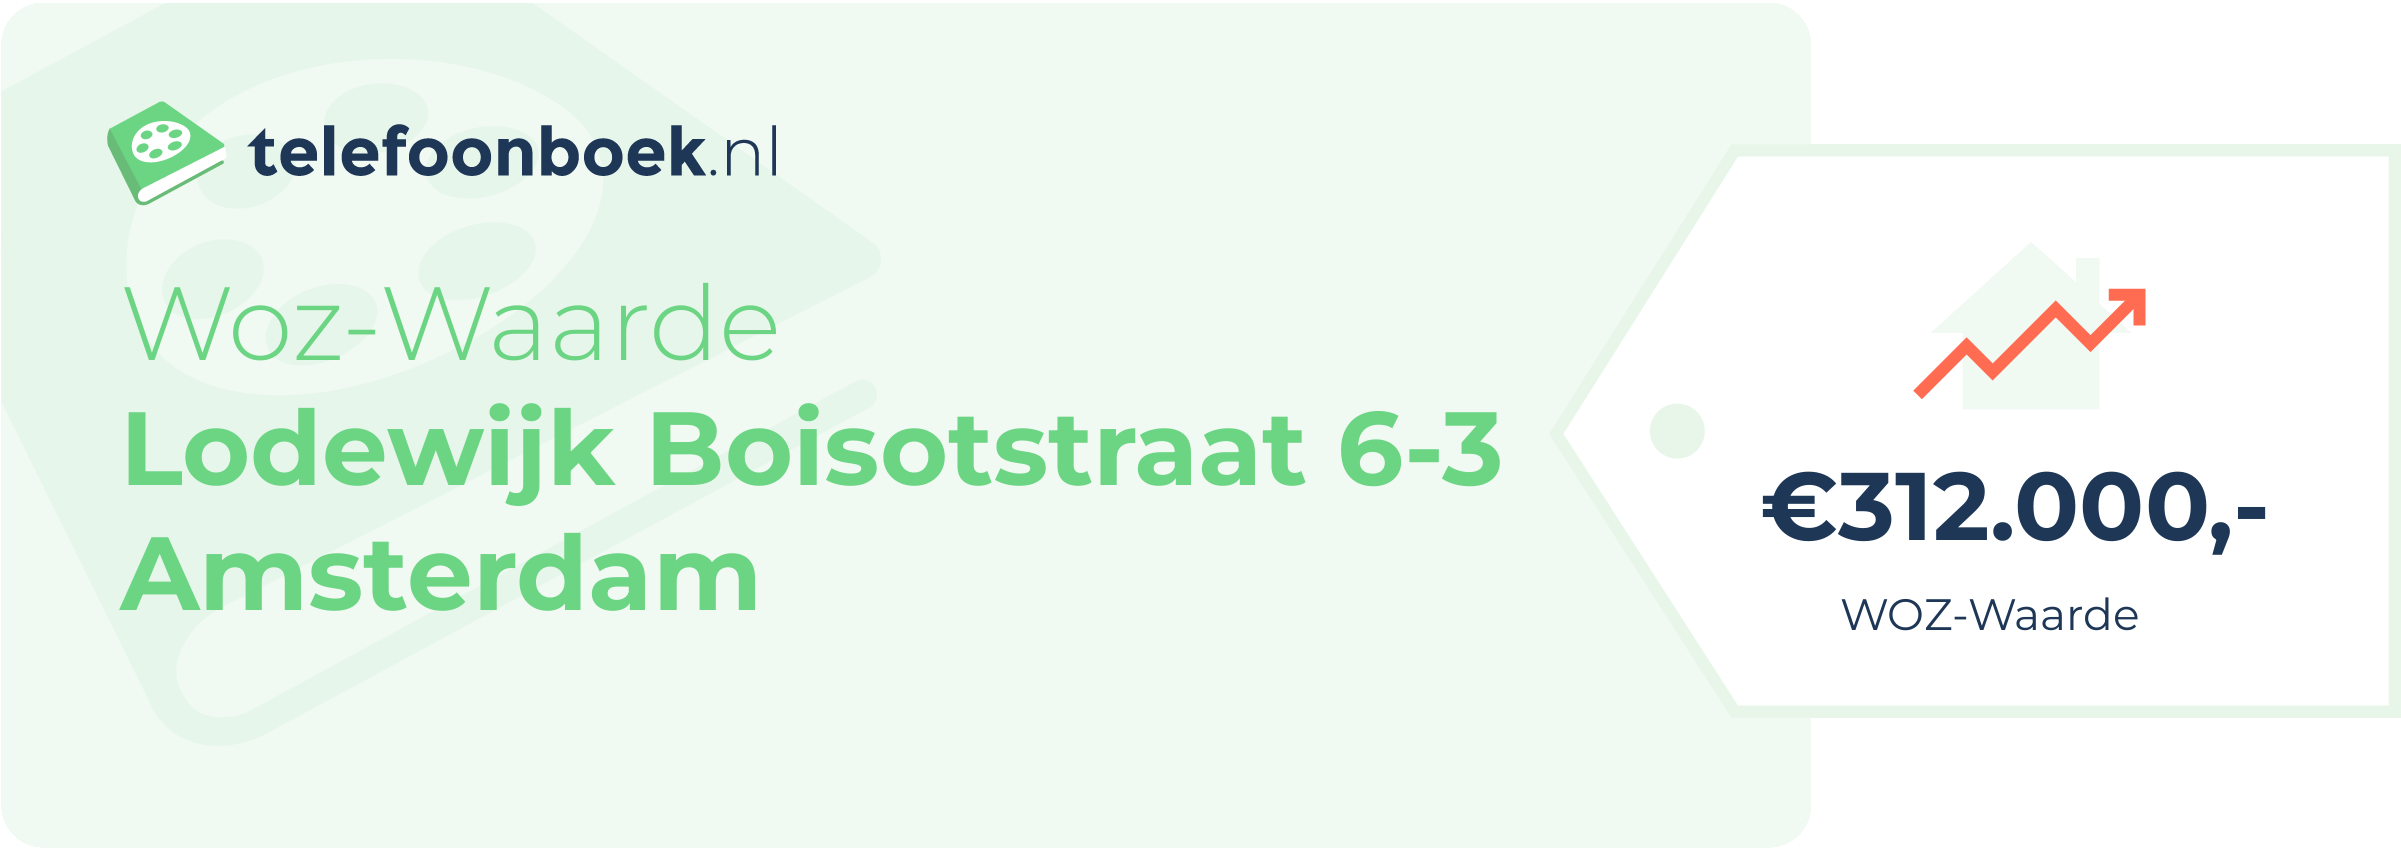 WOZ-waarde Lodewijk Boisotstraat 6-3 Amsterdam